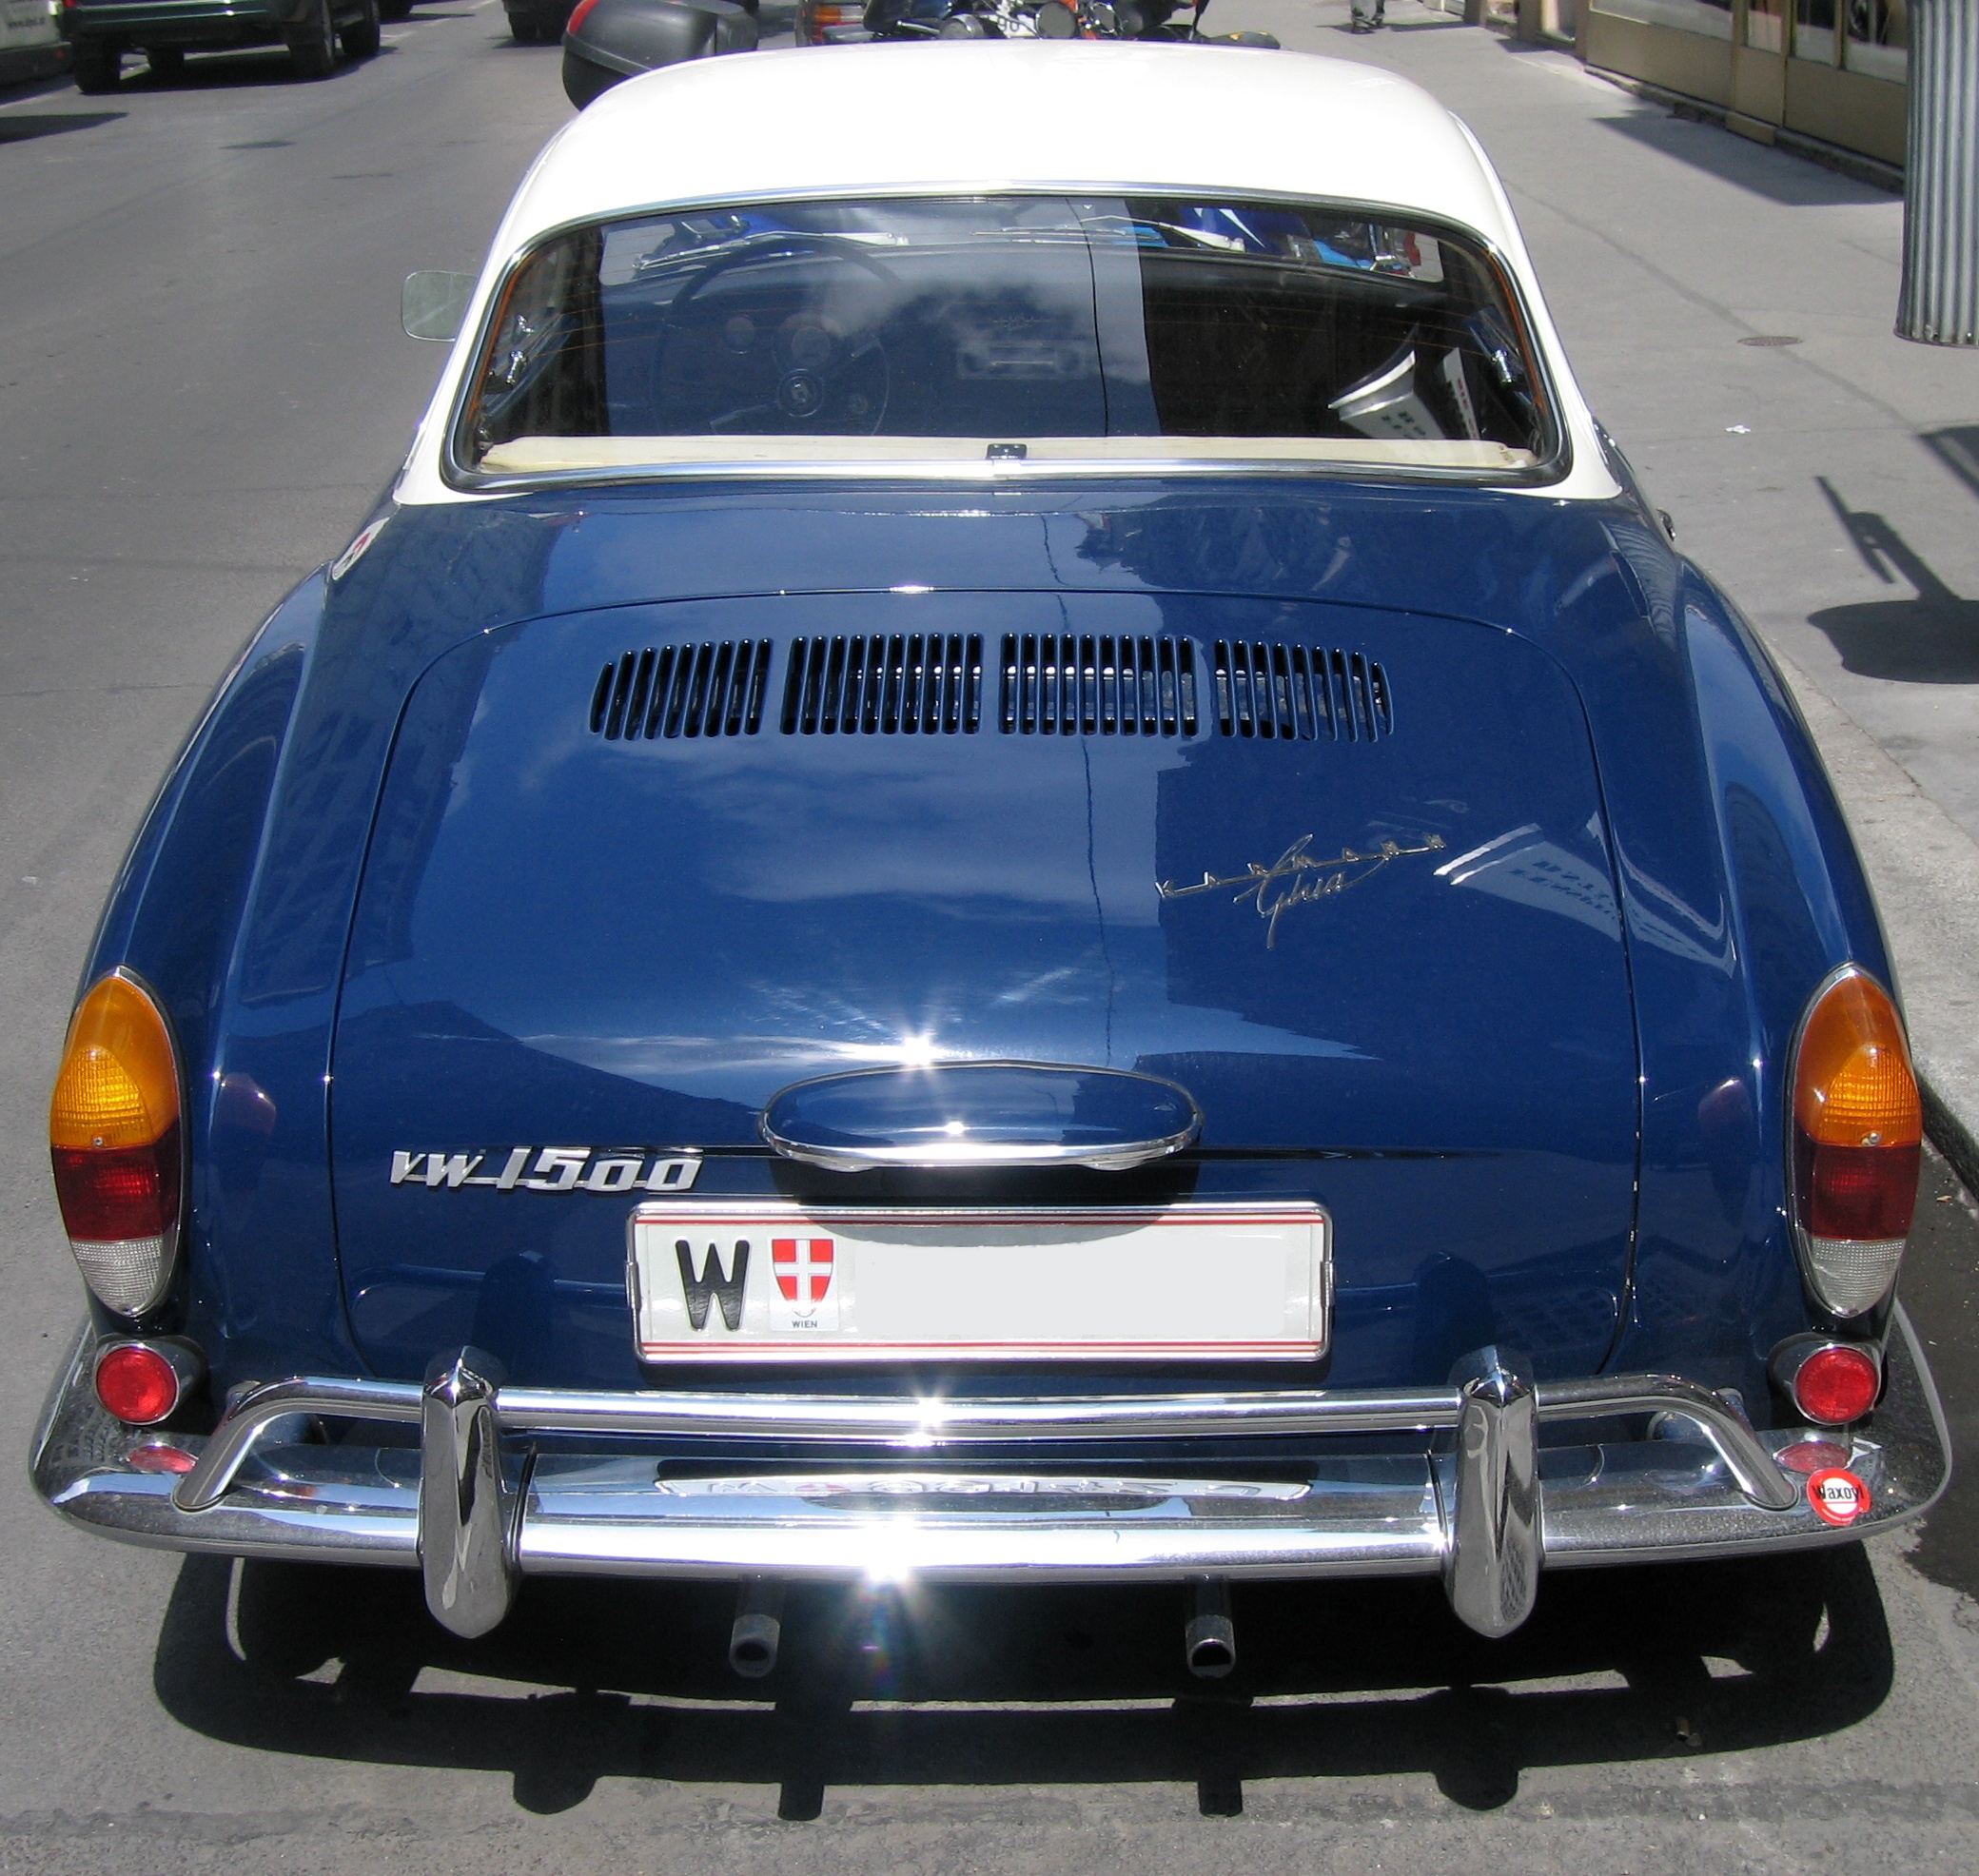 File:Volkswagen 1500 in Vienna 2.jpg - Wikimedia Commons